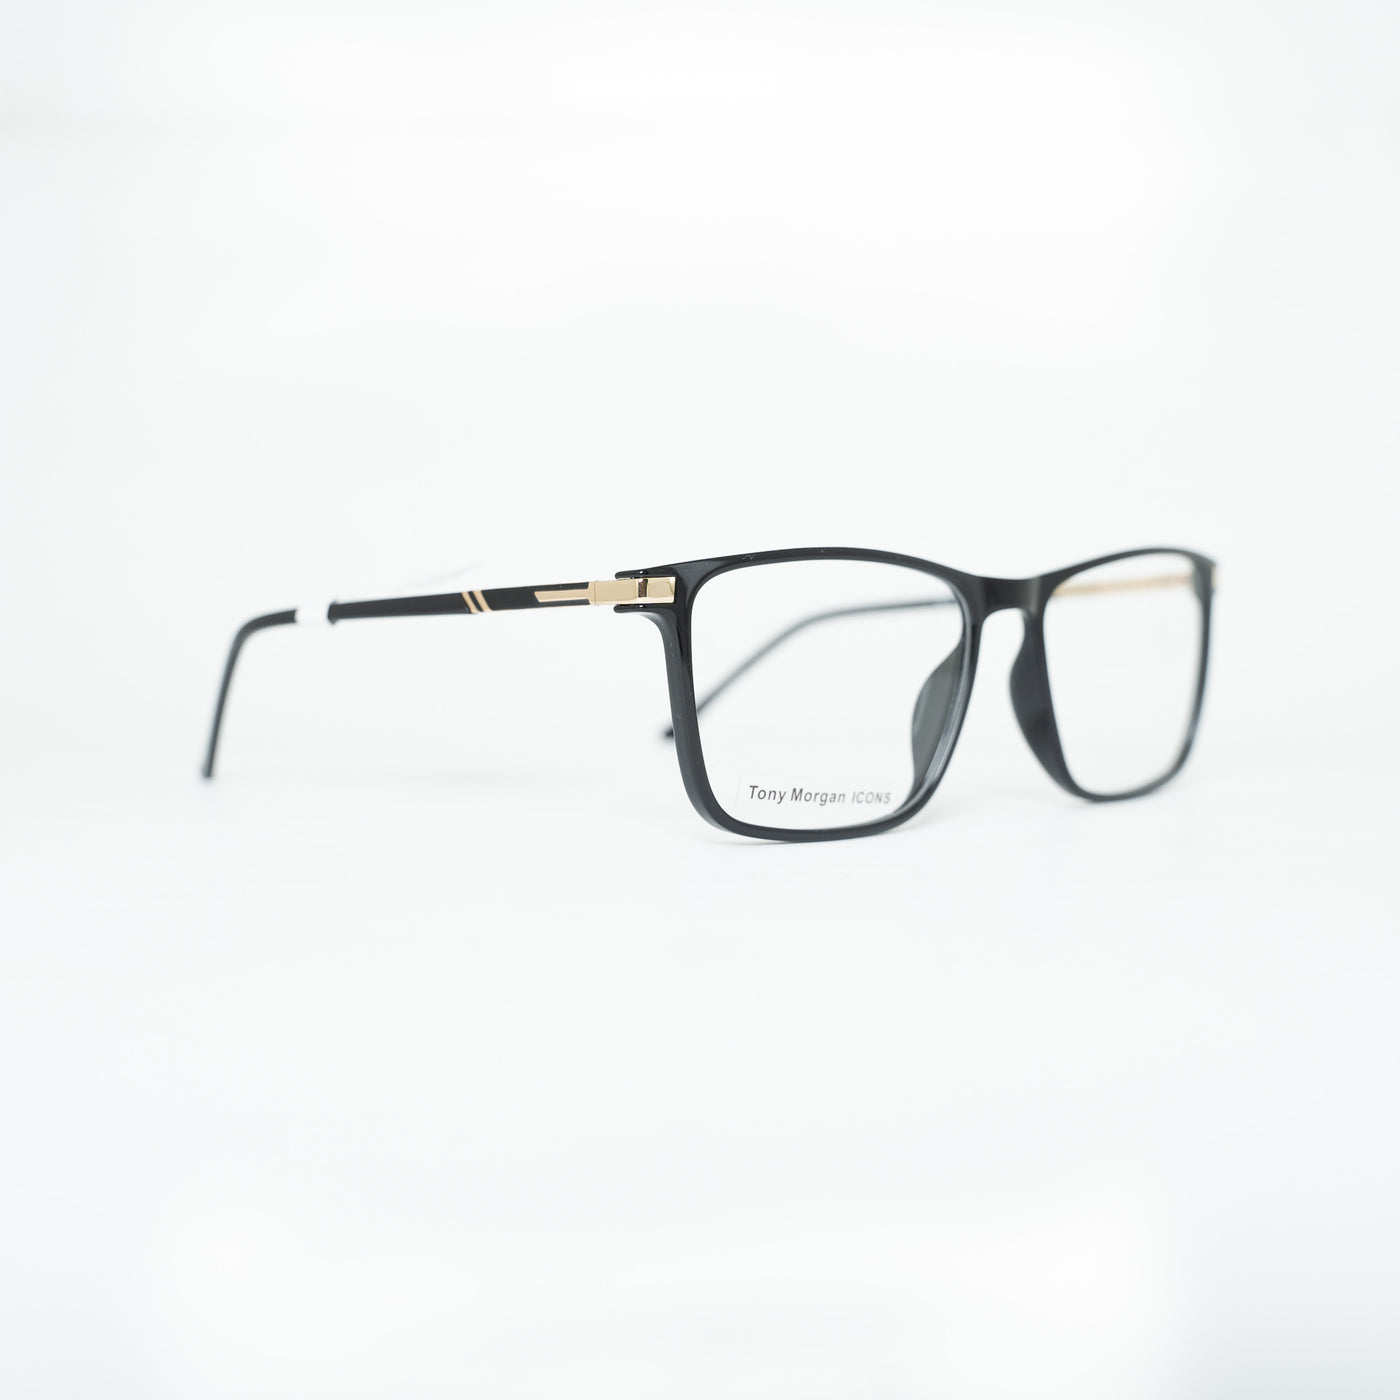 Tony Morgan TM0904GOLD54 | Eyeglasses - Vision Express Optical Philippines